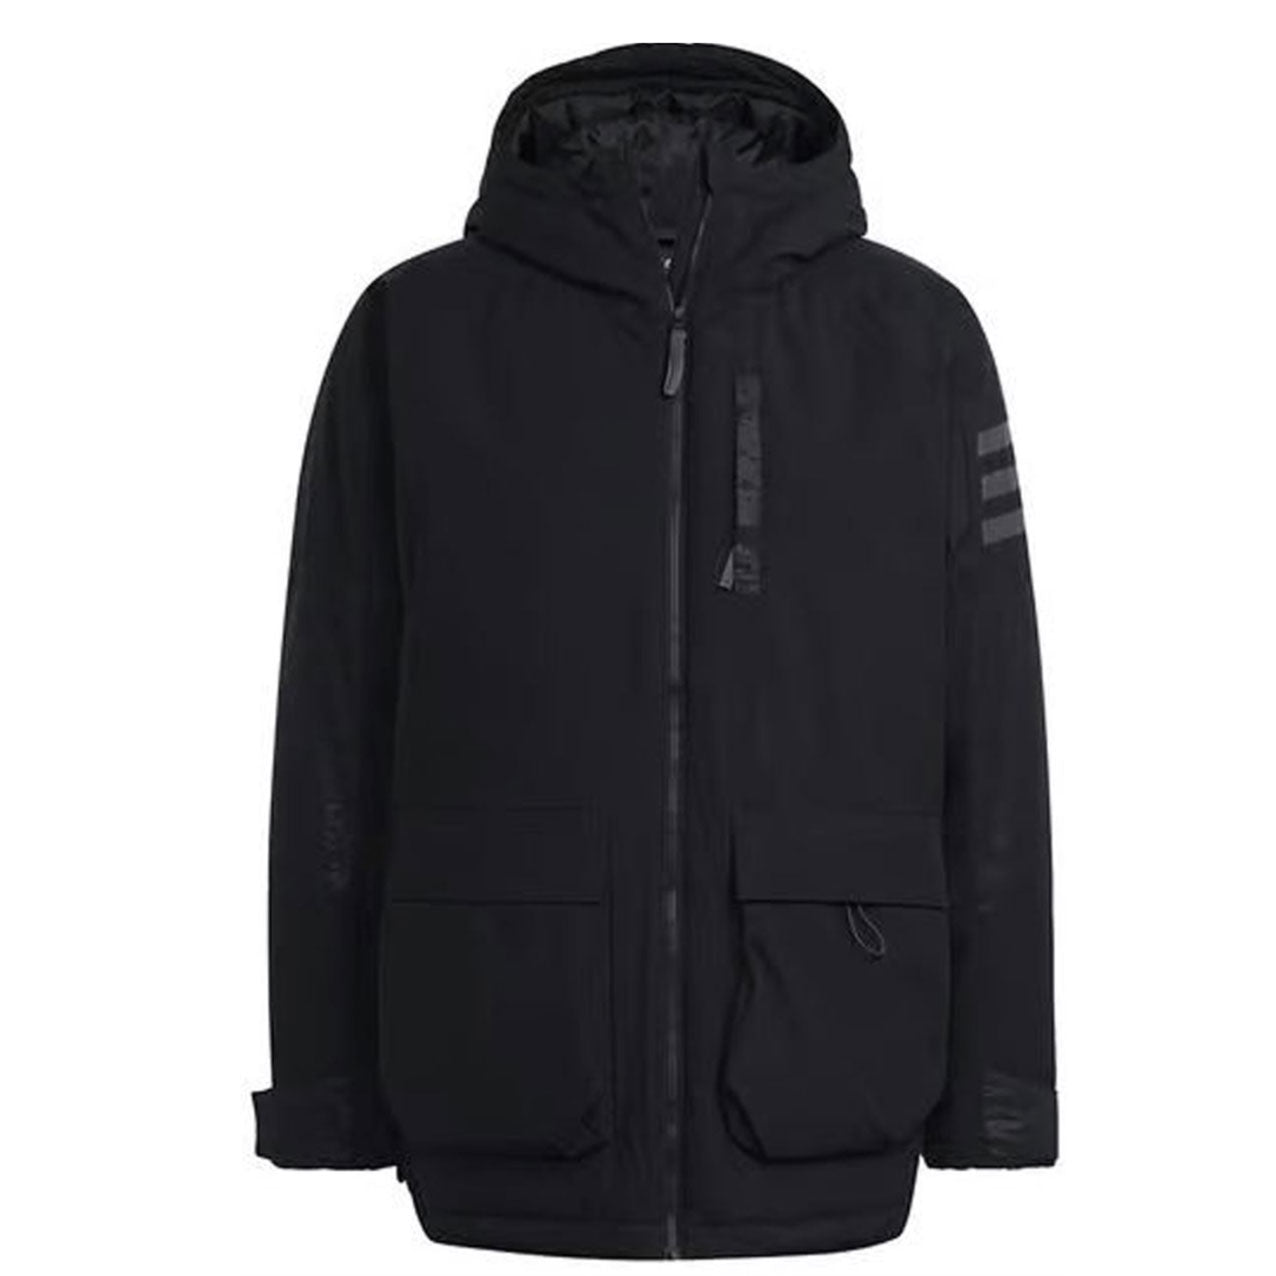 Adidas Mens Jacket Coat Polyester Black Winter Jacket Long Sleeve Hooded Coat - MRGOUTLETS